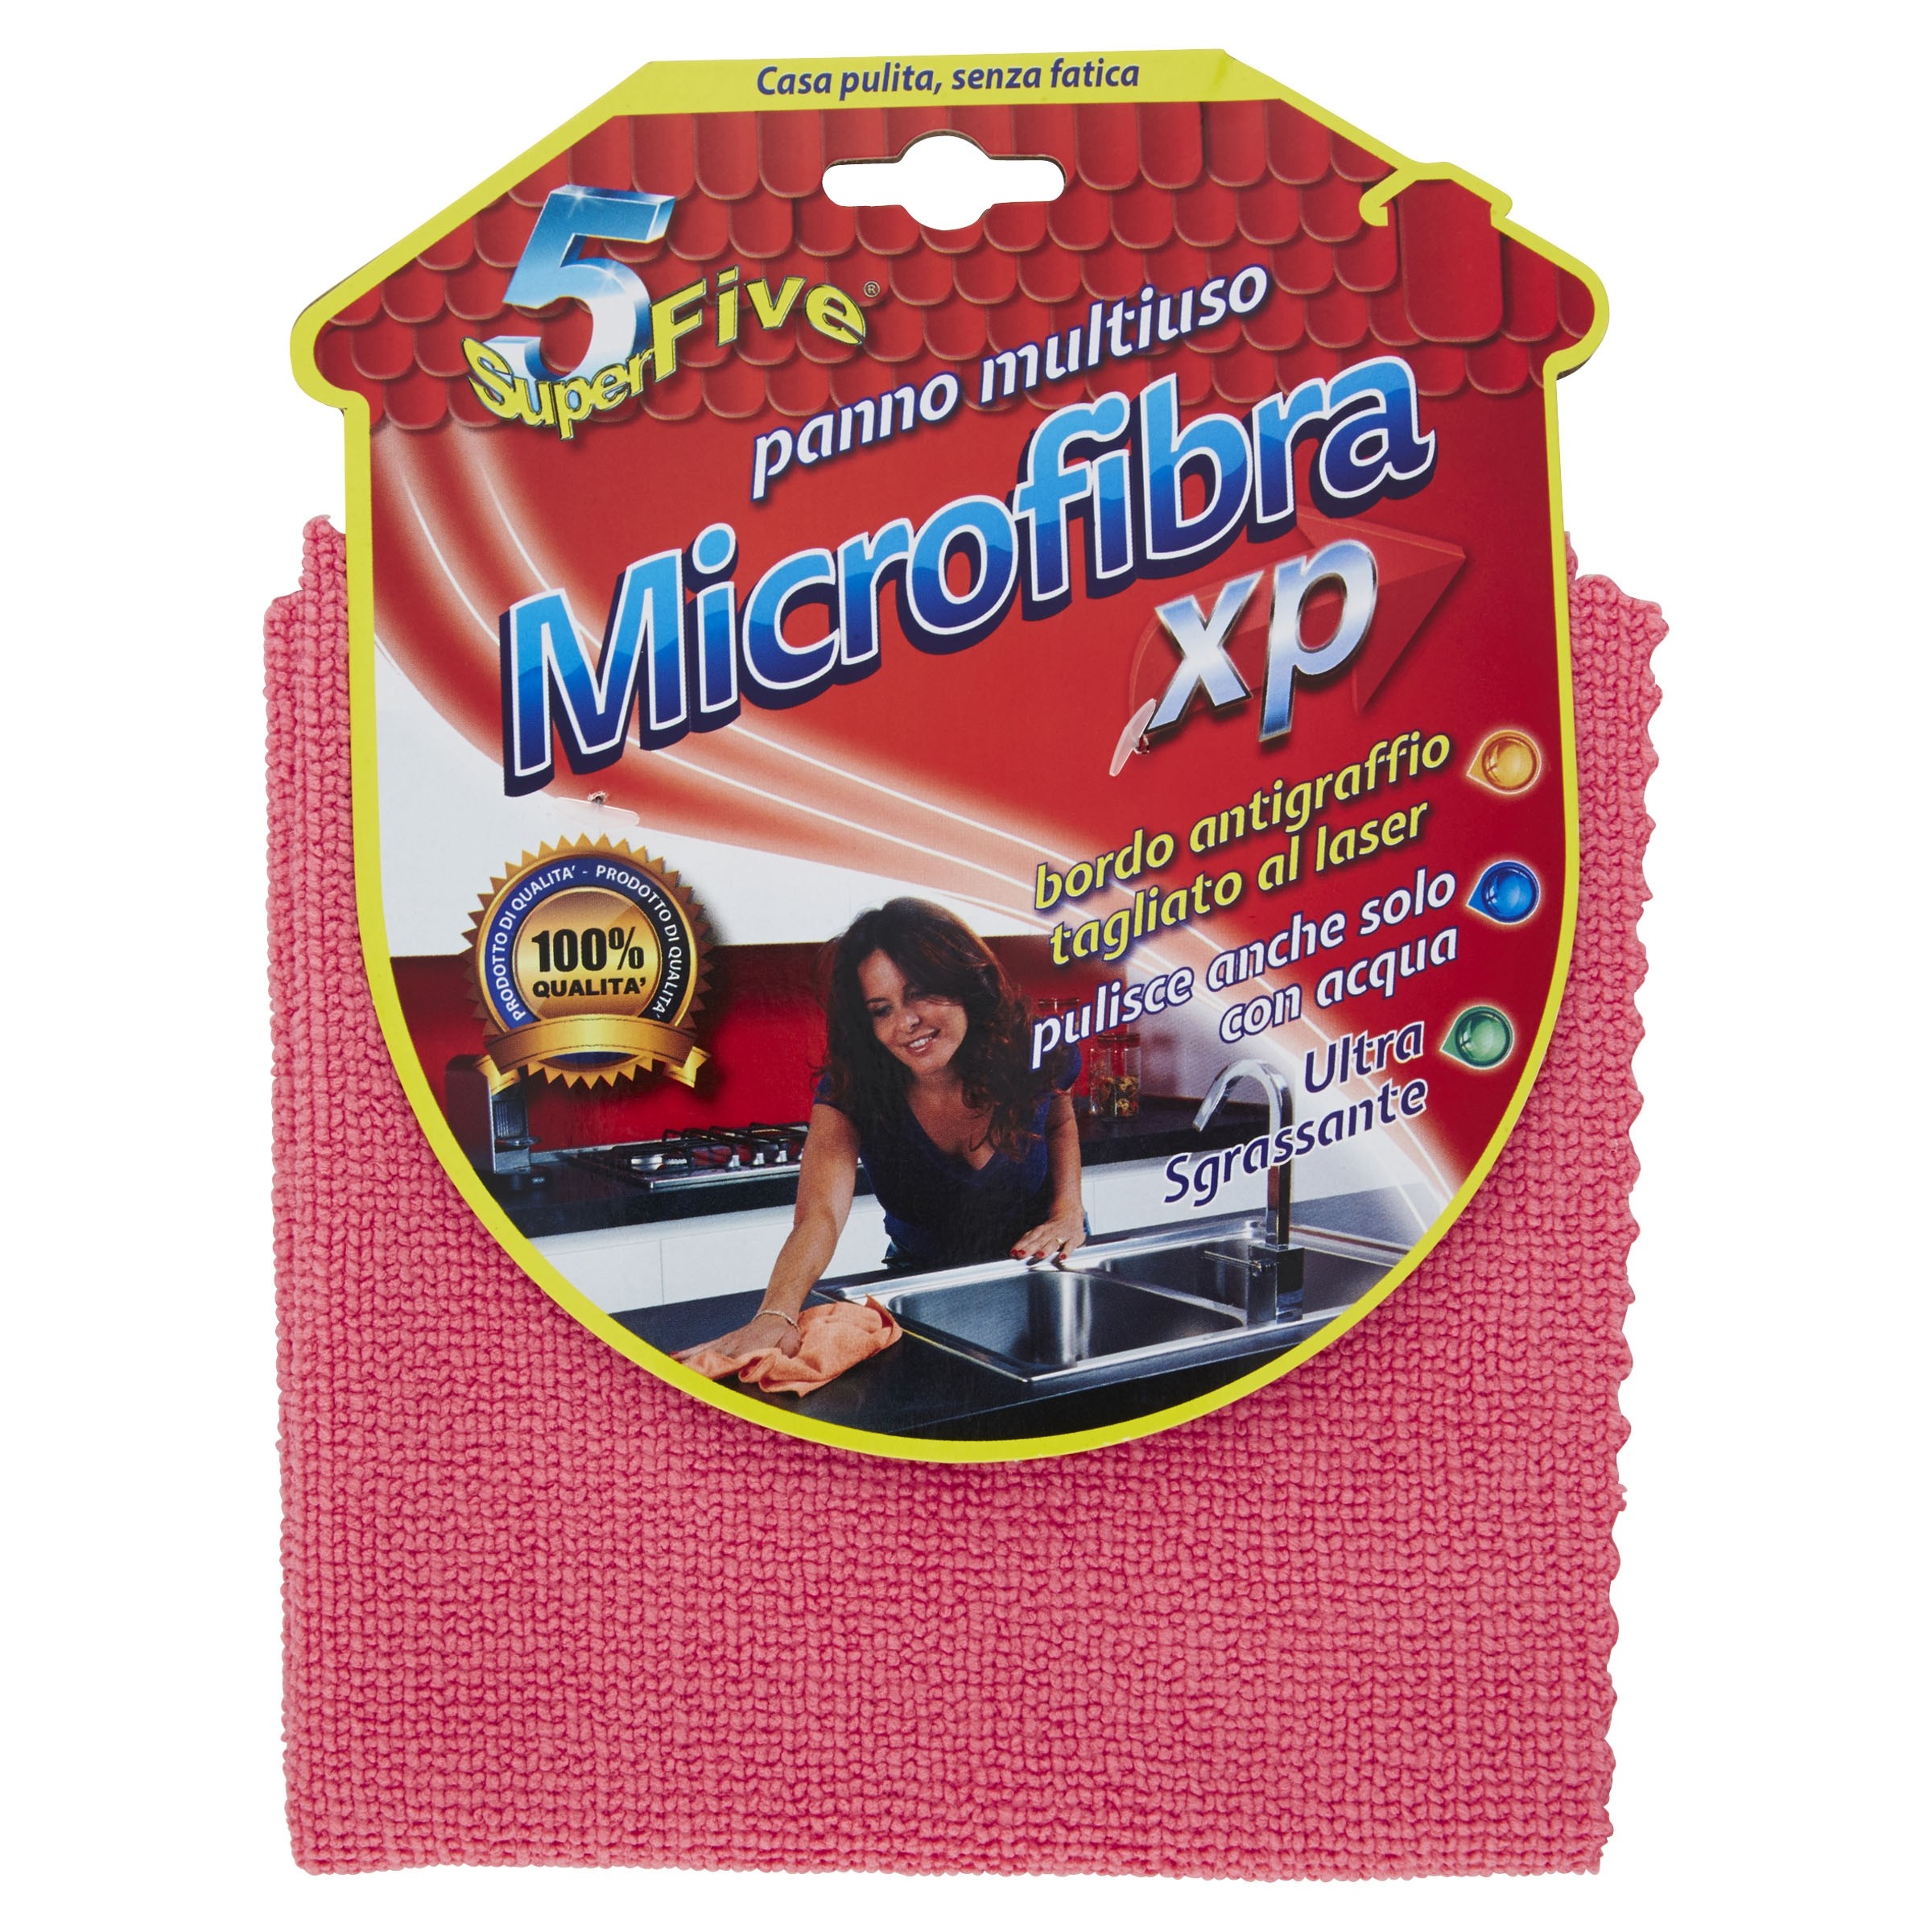 Microfibra Xp